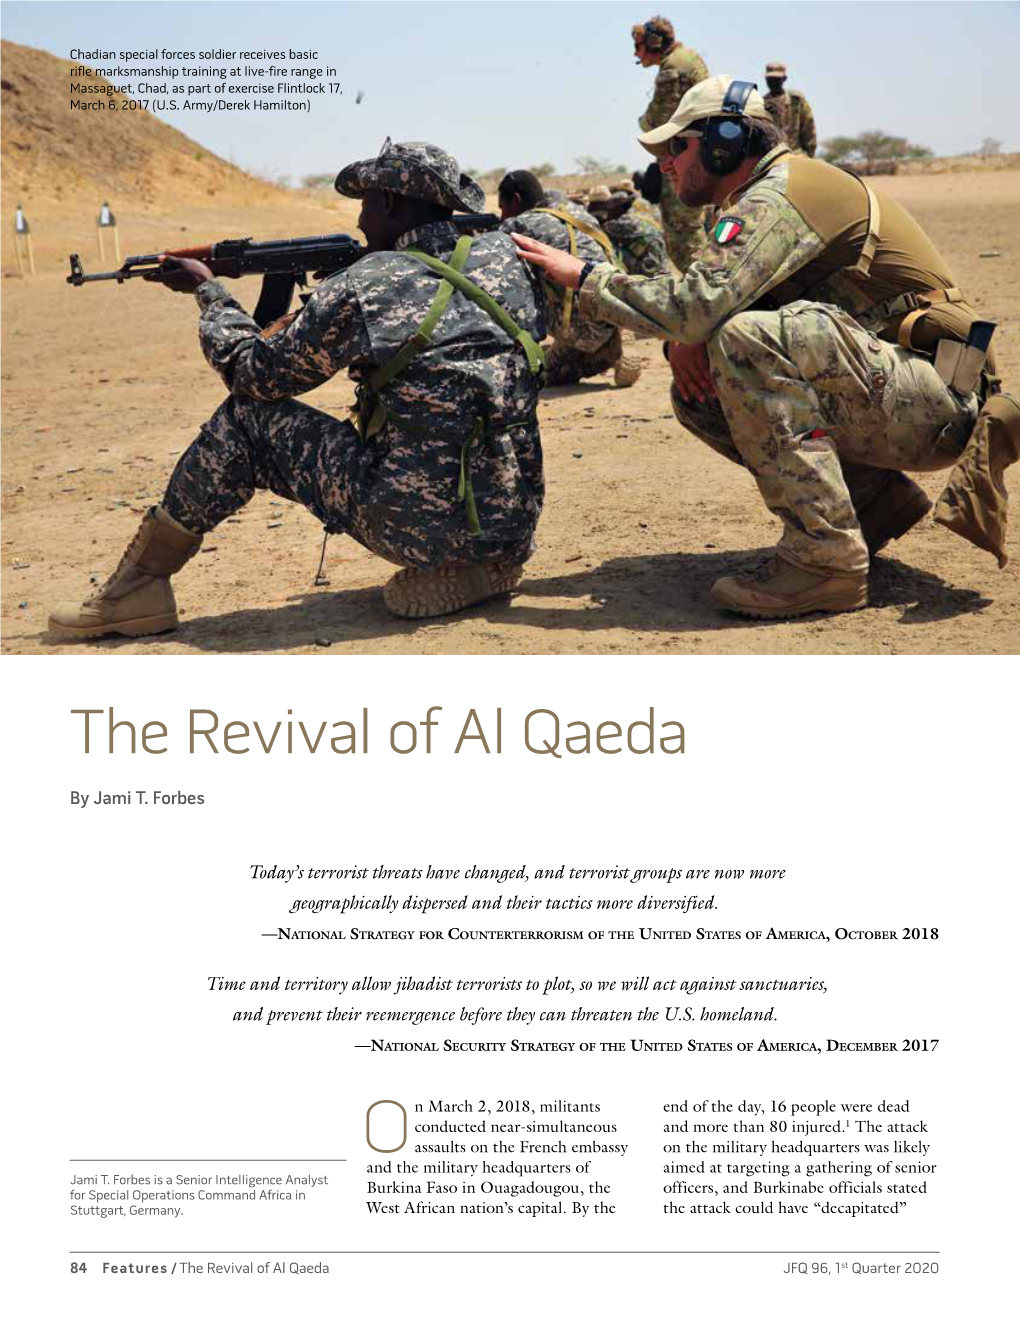 The Revival of Al Qaeda